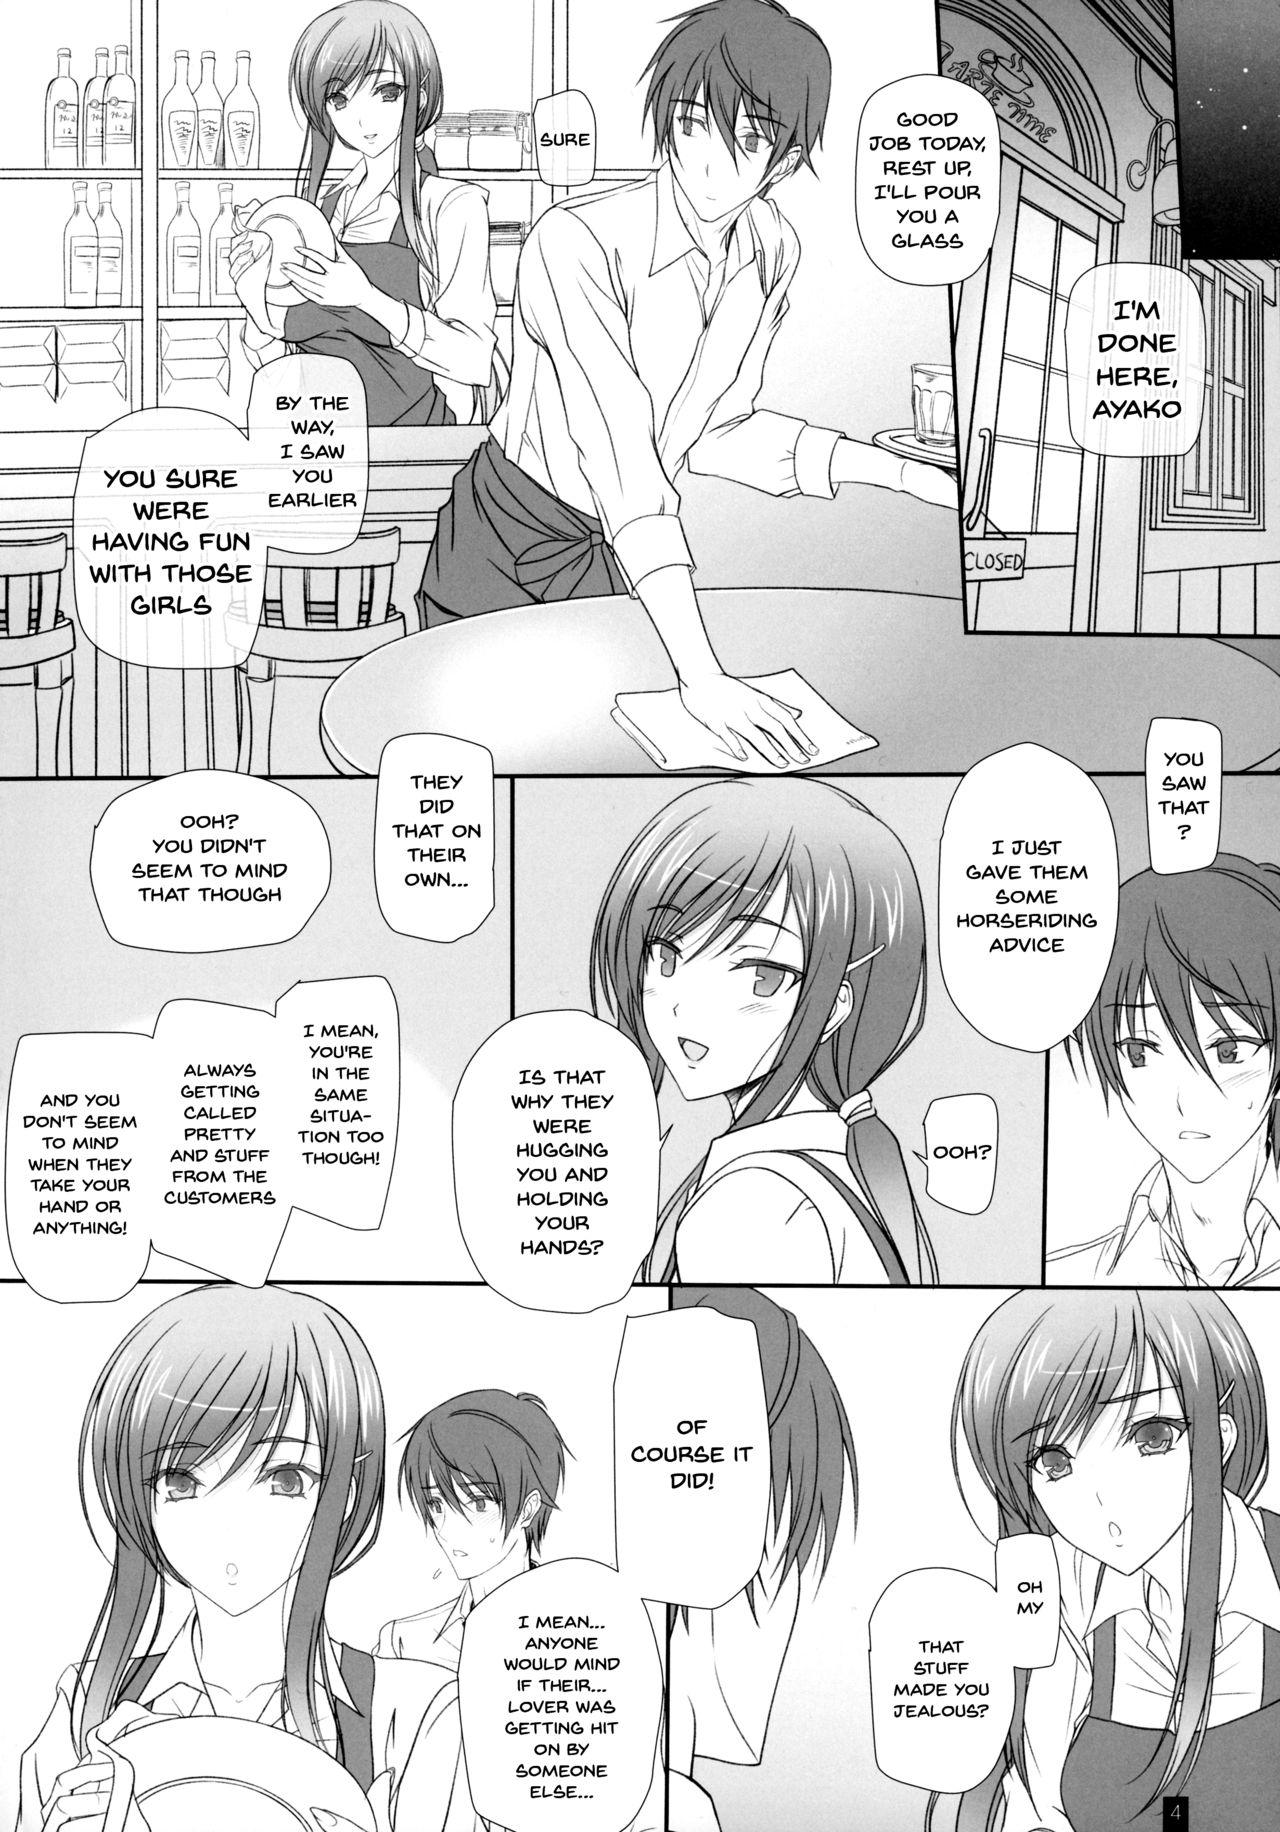 Teen Oh! Ayako! More!&More!! - Walkure romanze Cum Eating - Page 3